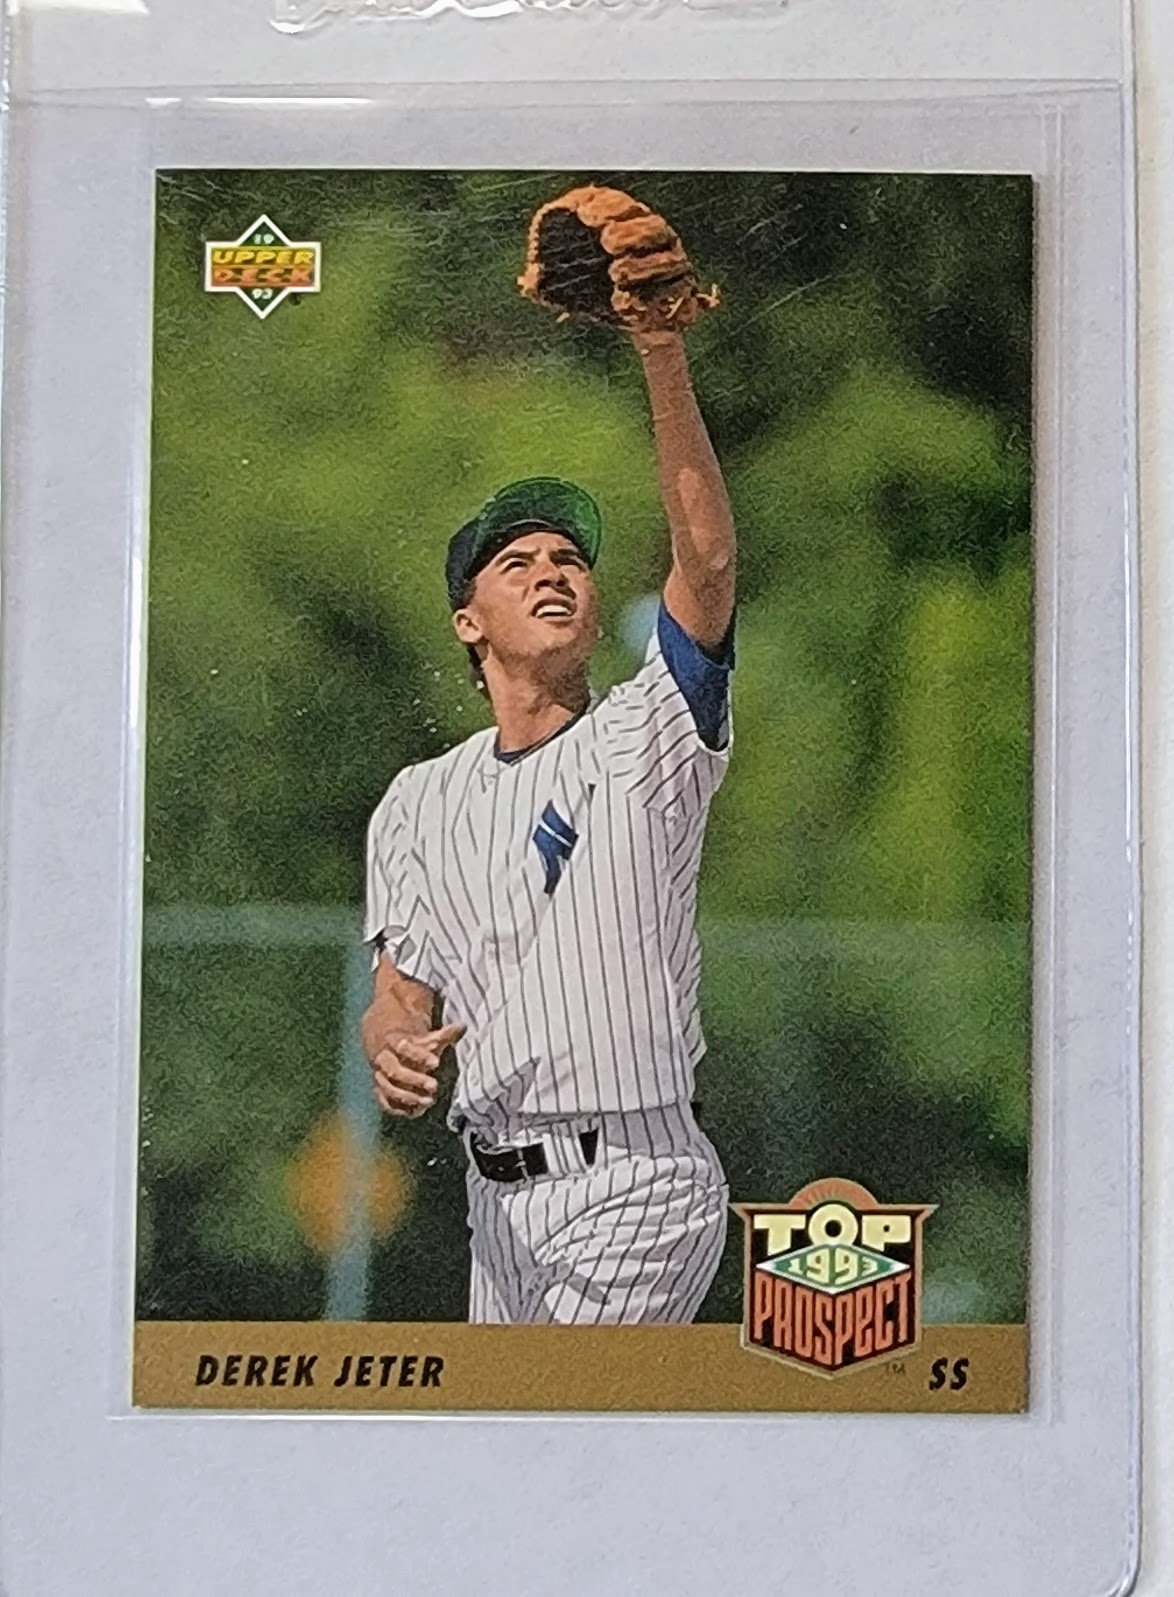 1993 Upper Deck Derek Jeter Rookie Top Prospects Baseball Trading Card cTPTV simple Xclusive Collectibles   